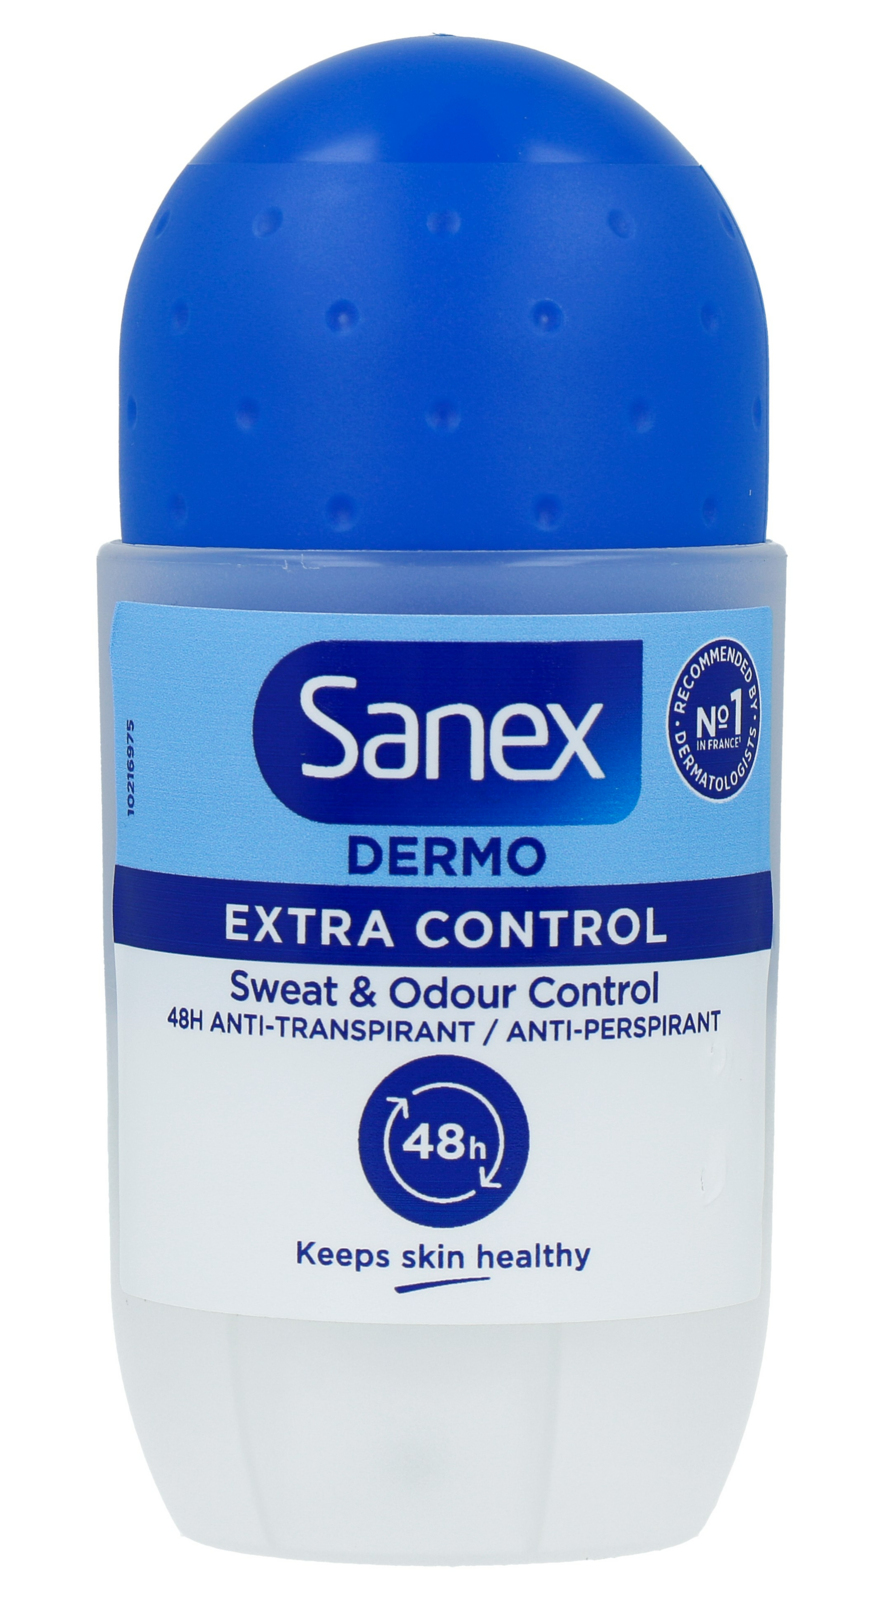 Sanex Dermo Extra Control Deodorant Roller